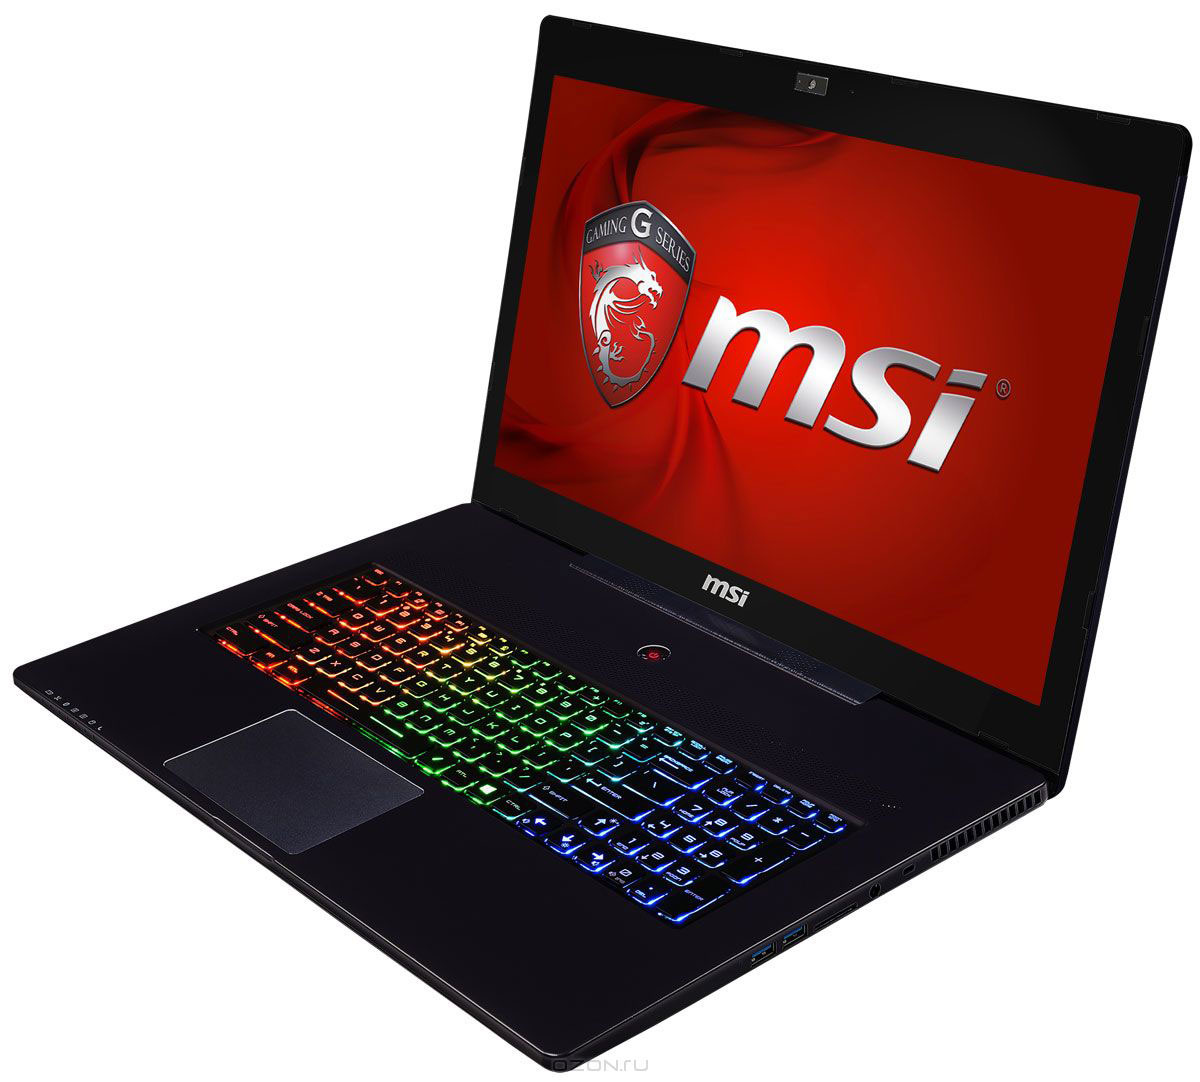 Ноутбук Msi Gs70 Stealth Цена